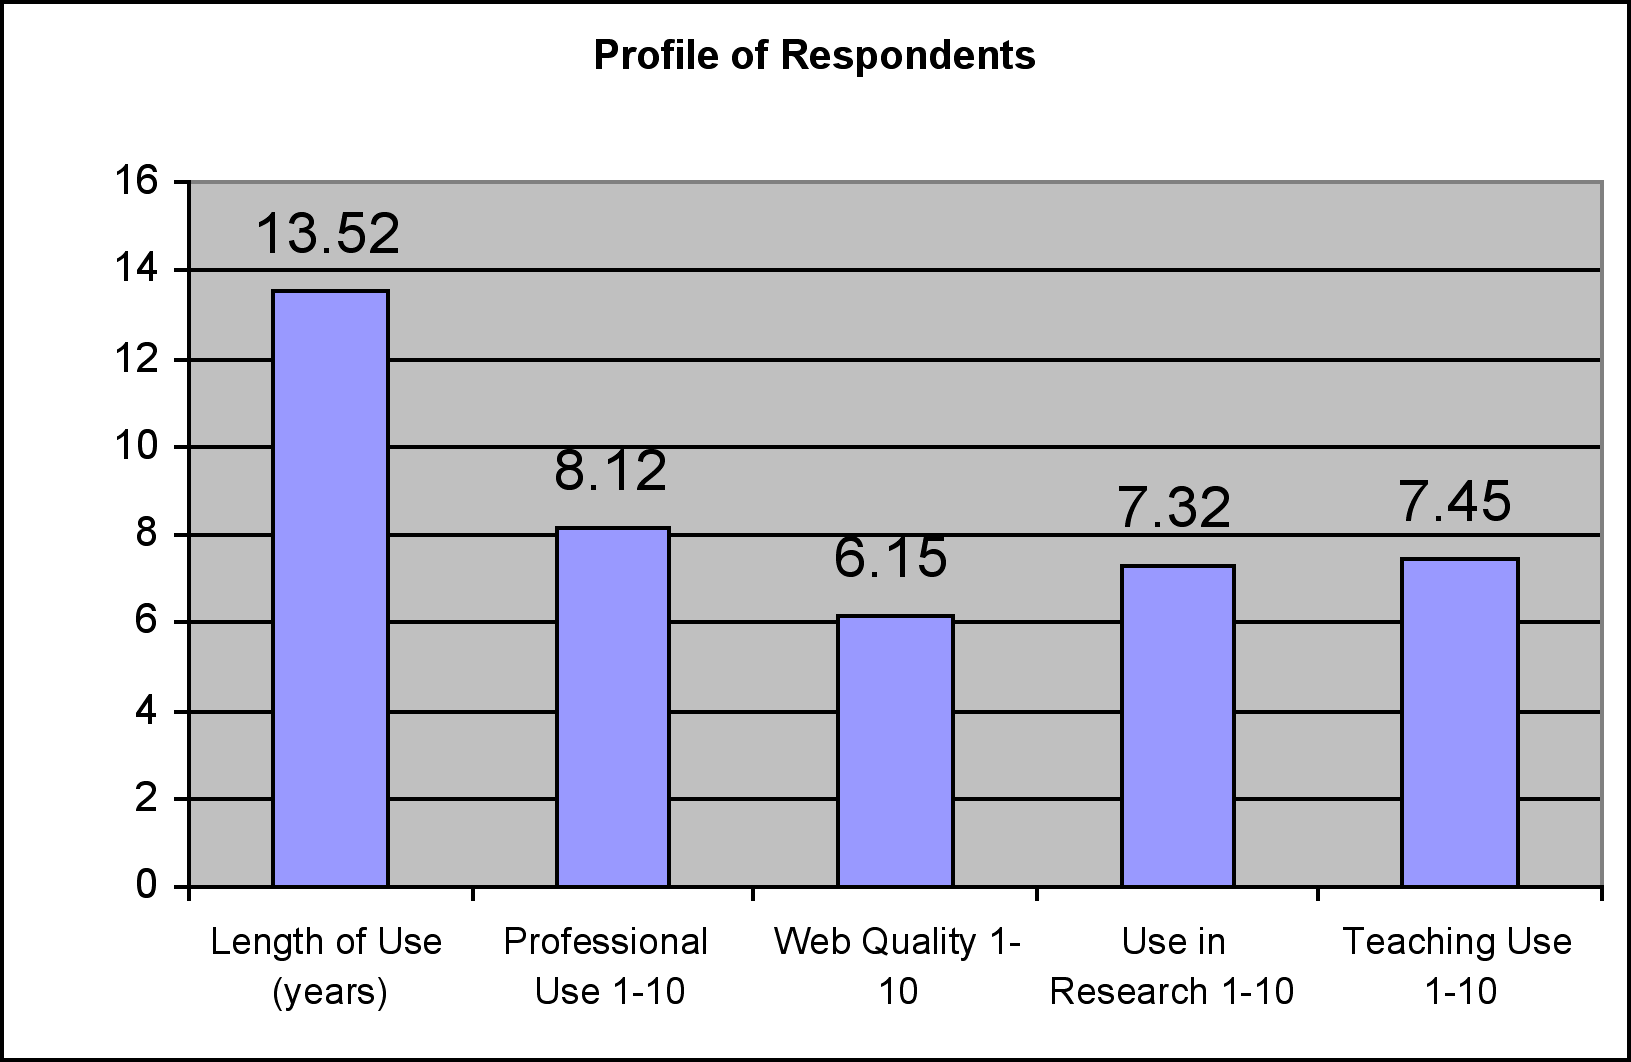 Profile of Respondents